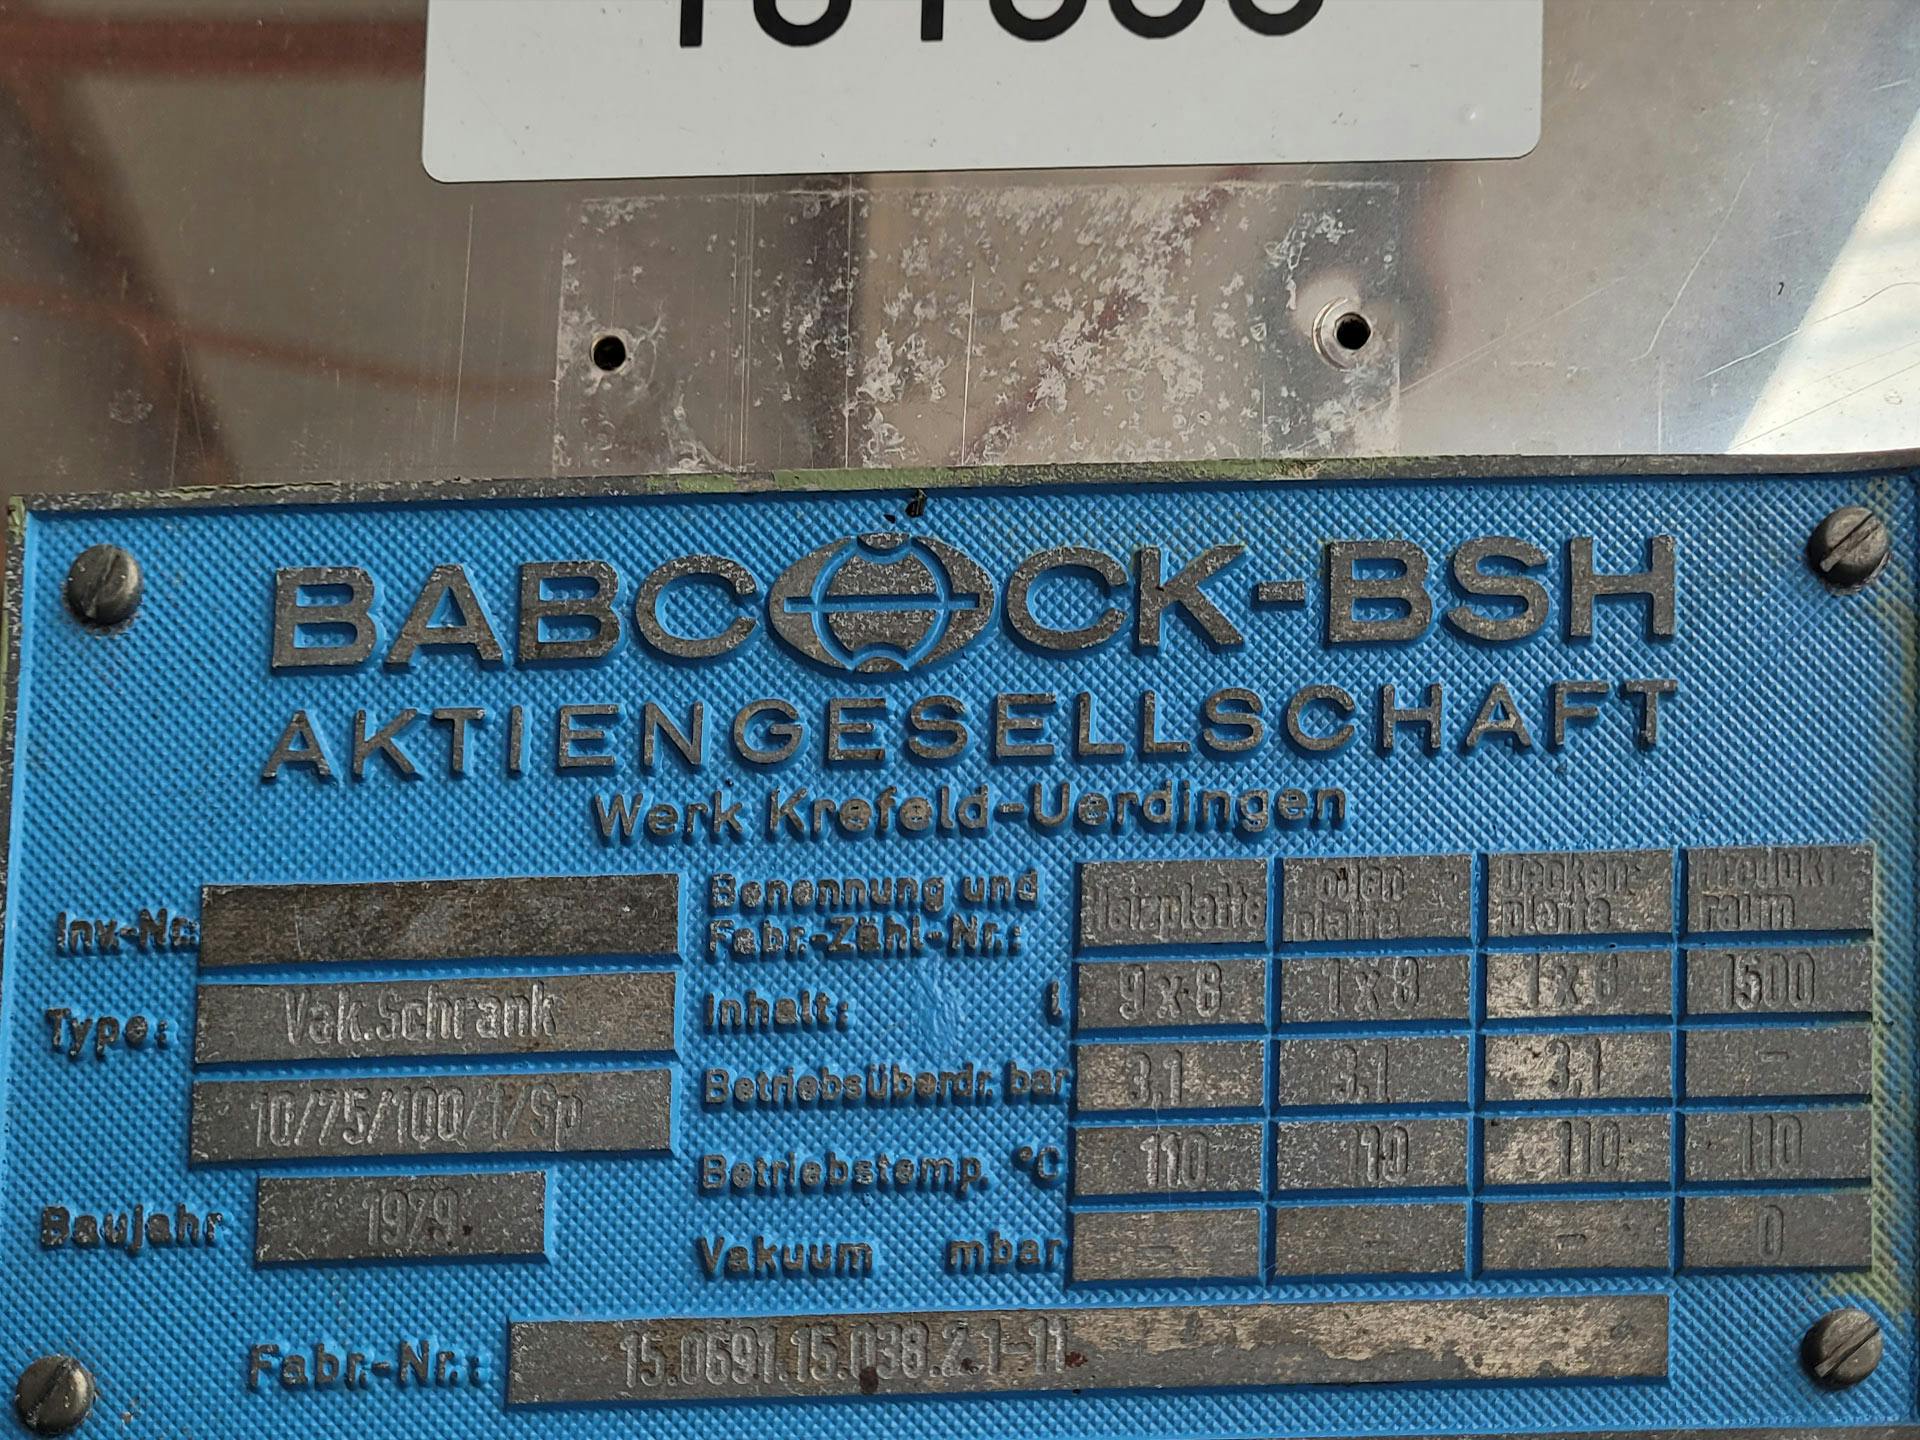 Babcock-BSH 10/75/100/1/SP - Полочная сушилка - image 5